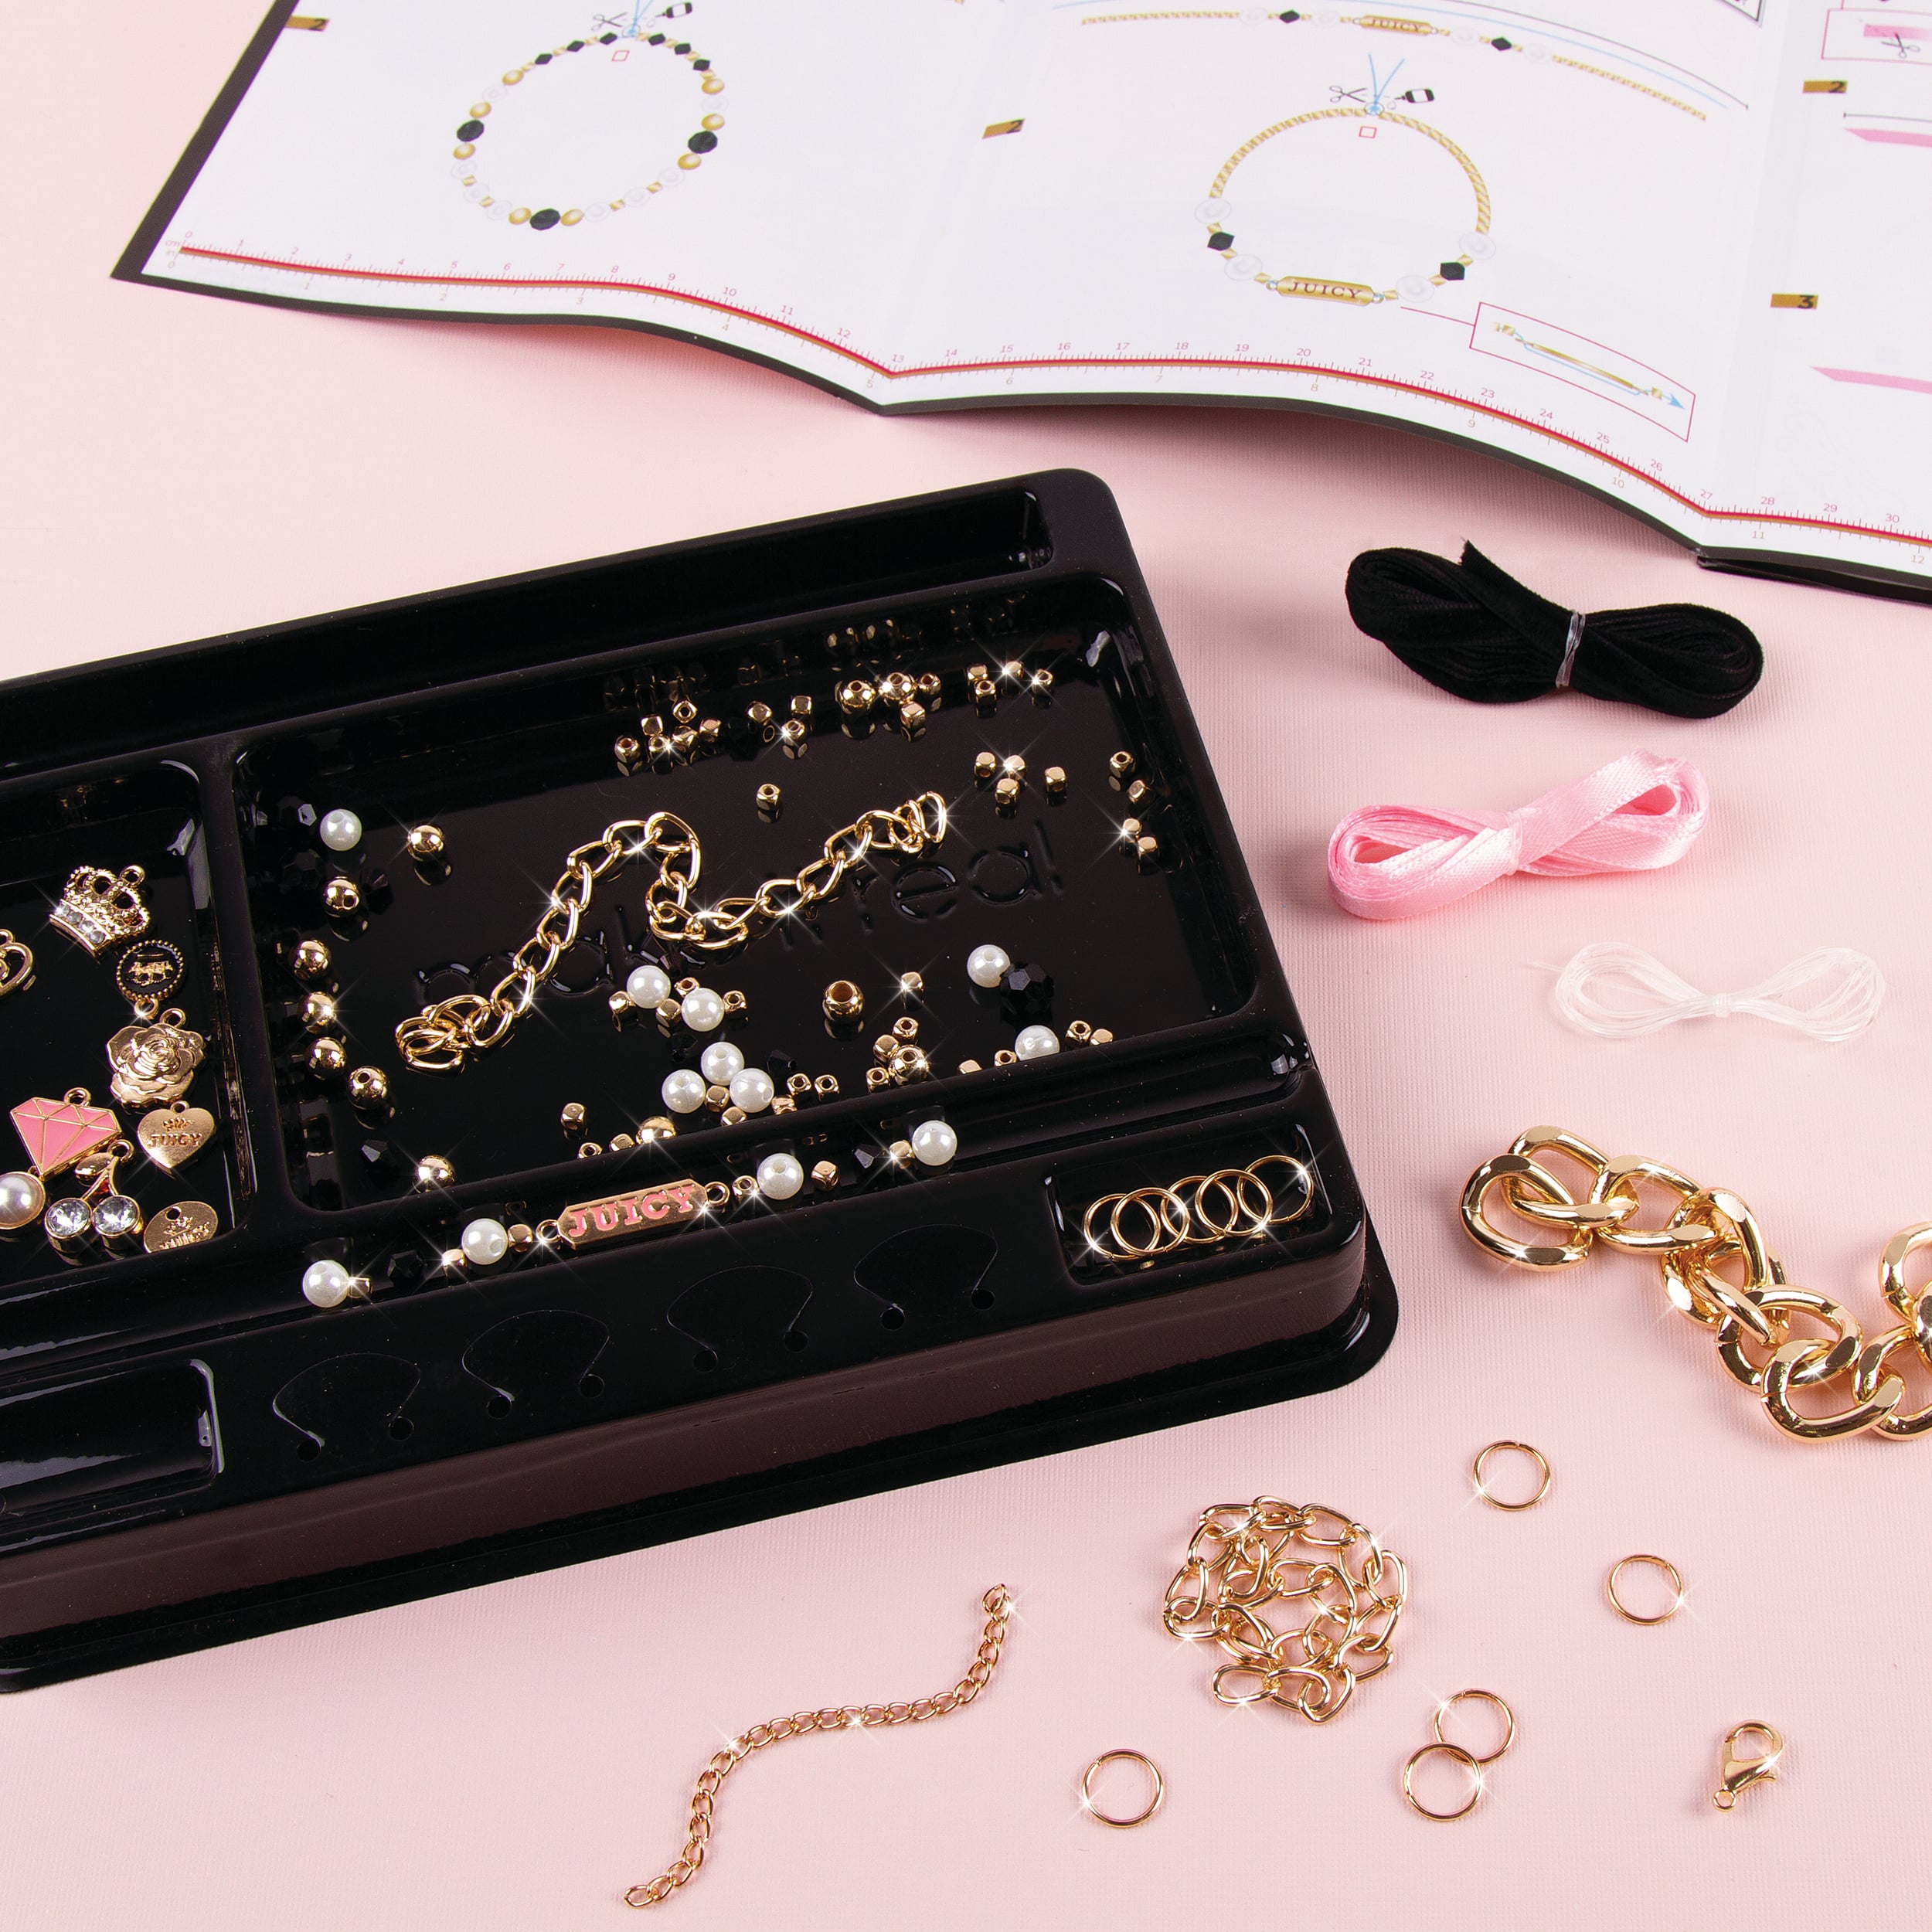 Juicy Couture Make It Real™ Charm Bracelet Kit, Michaels